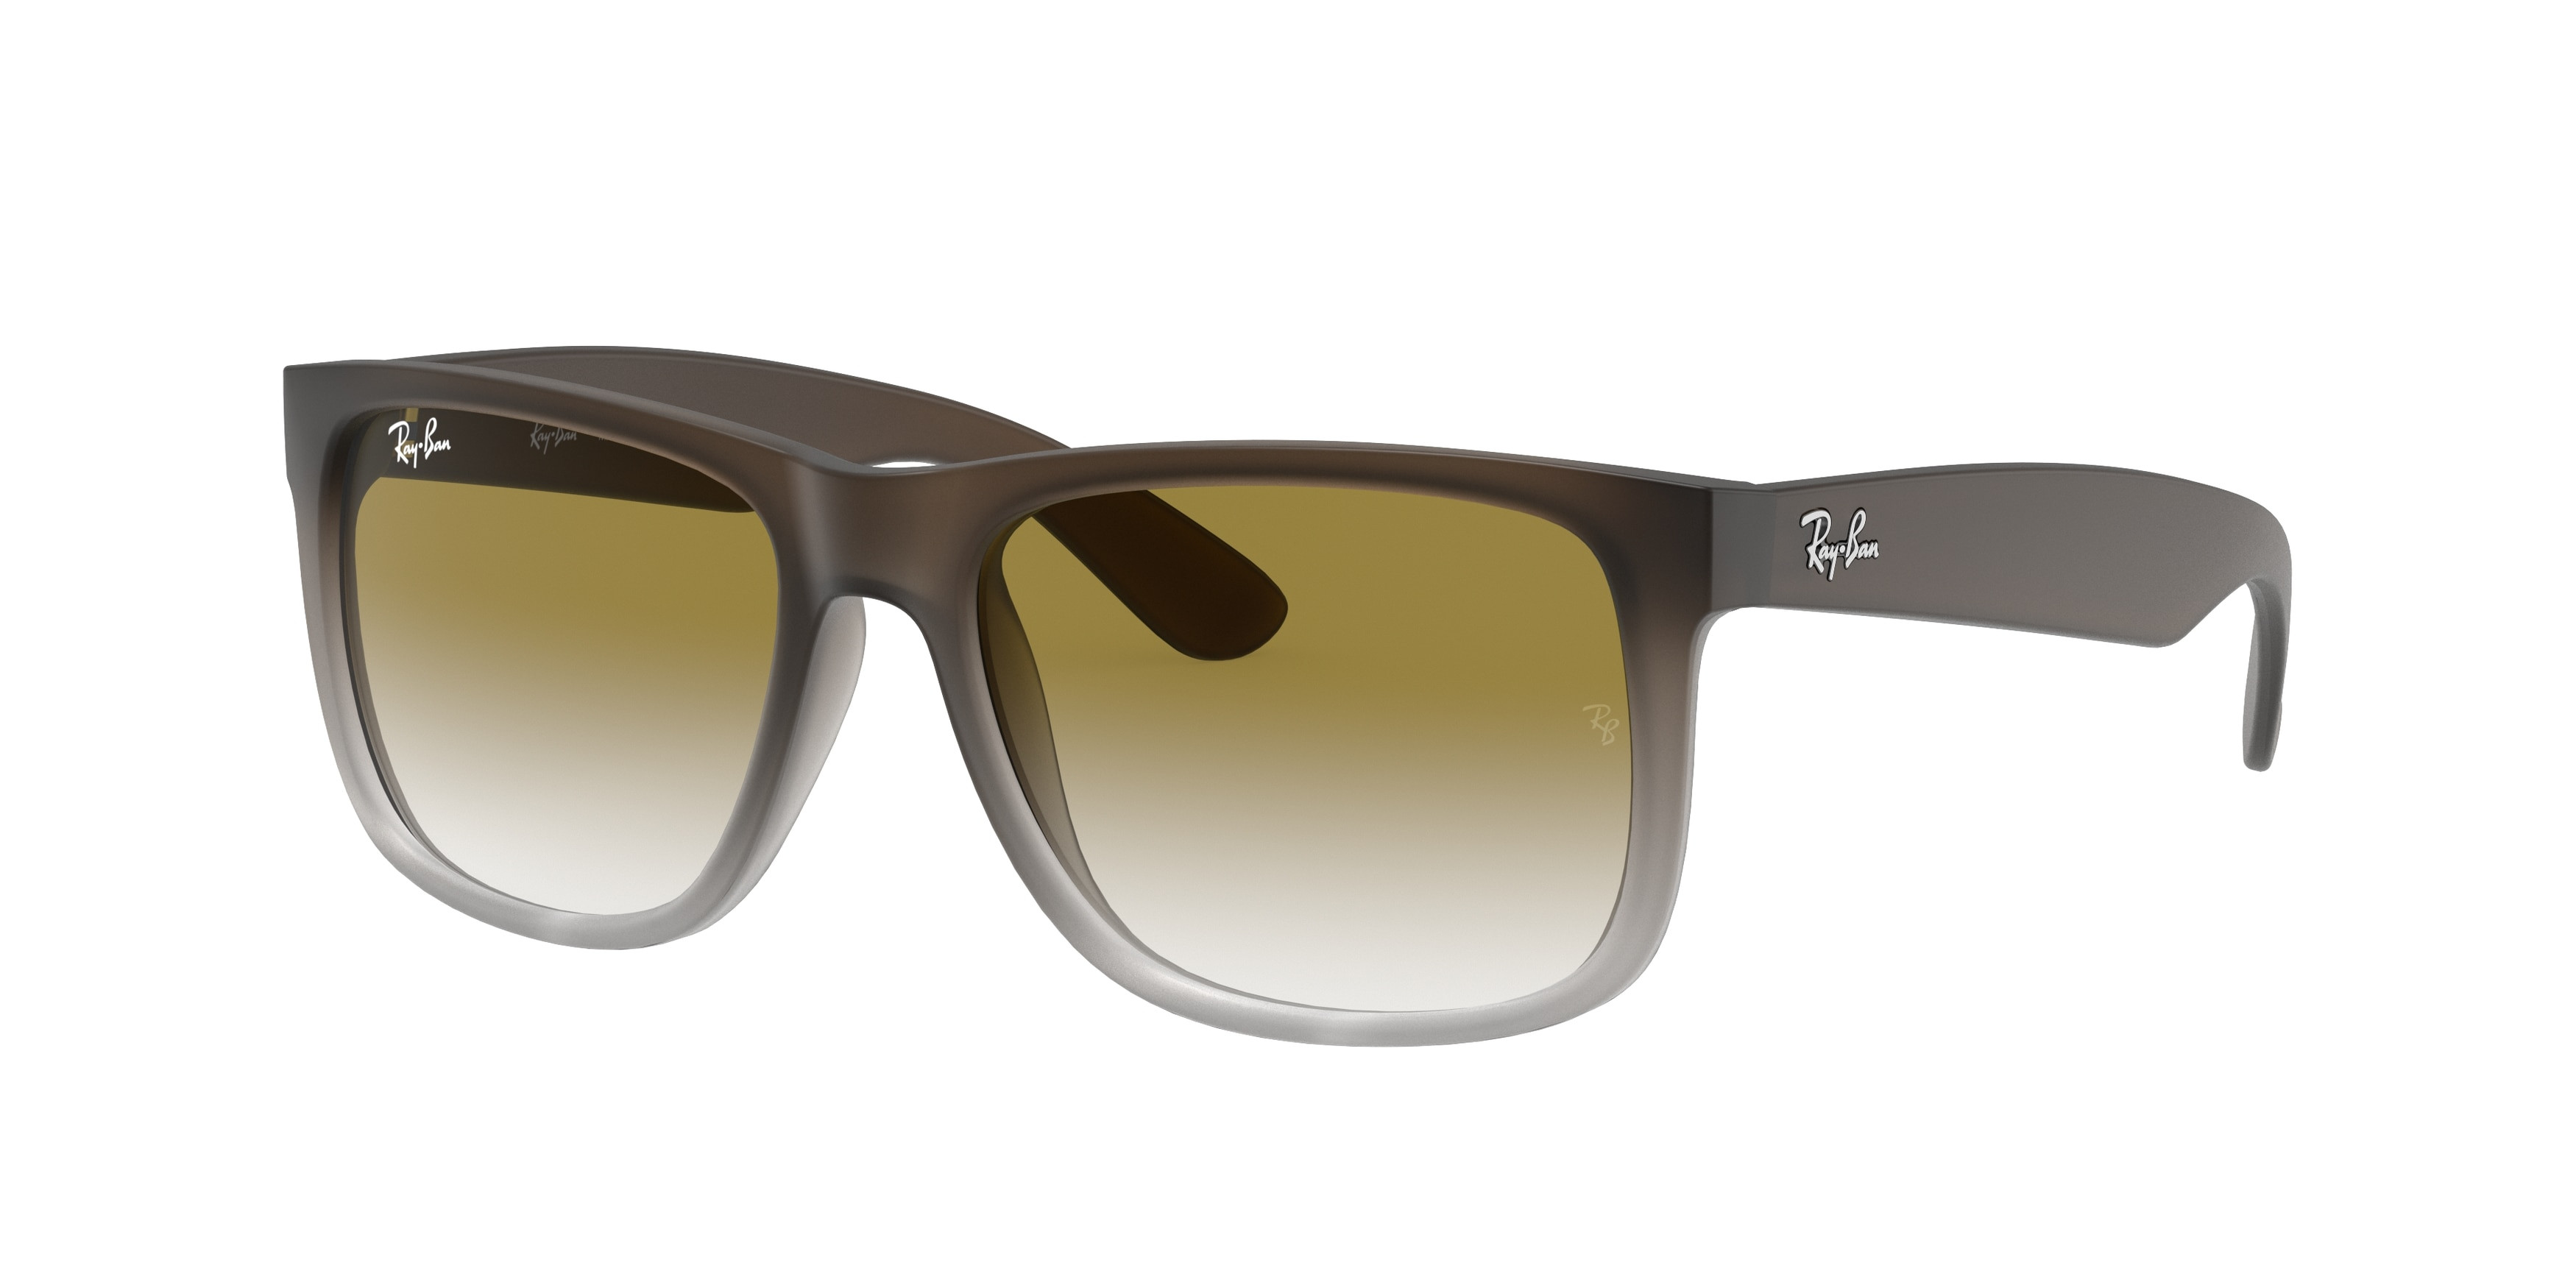 Ray-Ban Justin Nylon Frame Green Gradient Lens Unisex Sunglasses RB4165 - image 1 of 7